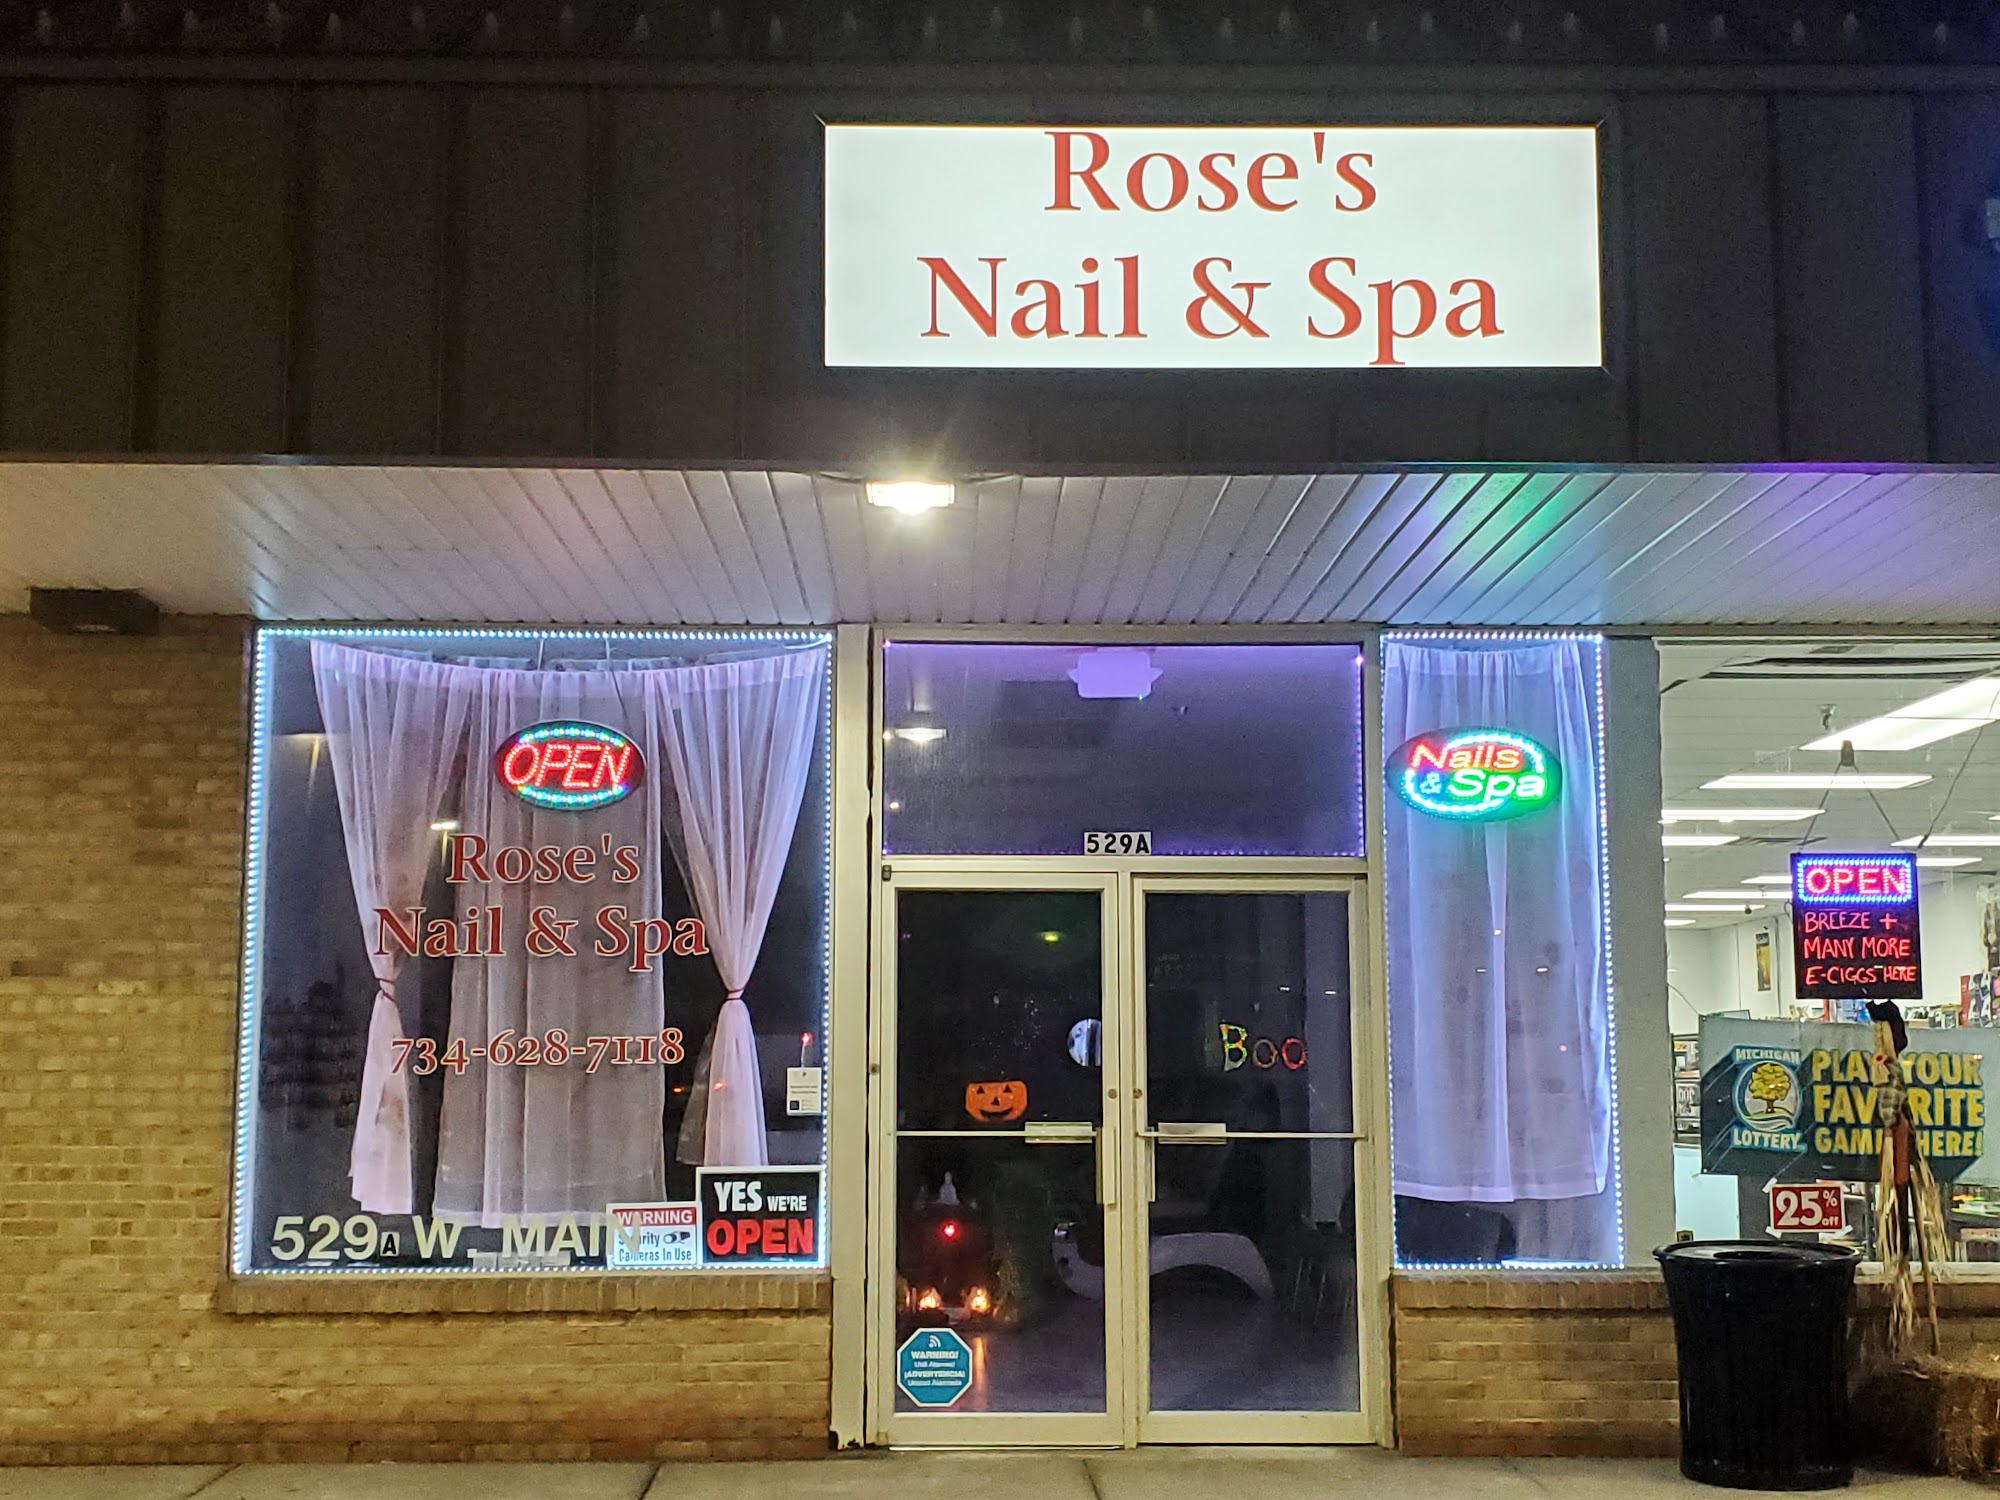 Rose's Nail & Spa LLC 529A W Main St, Milan Michigan 48160